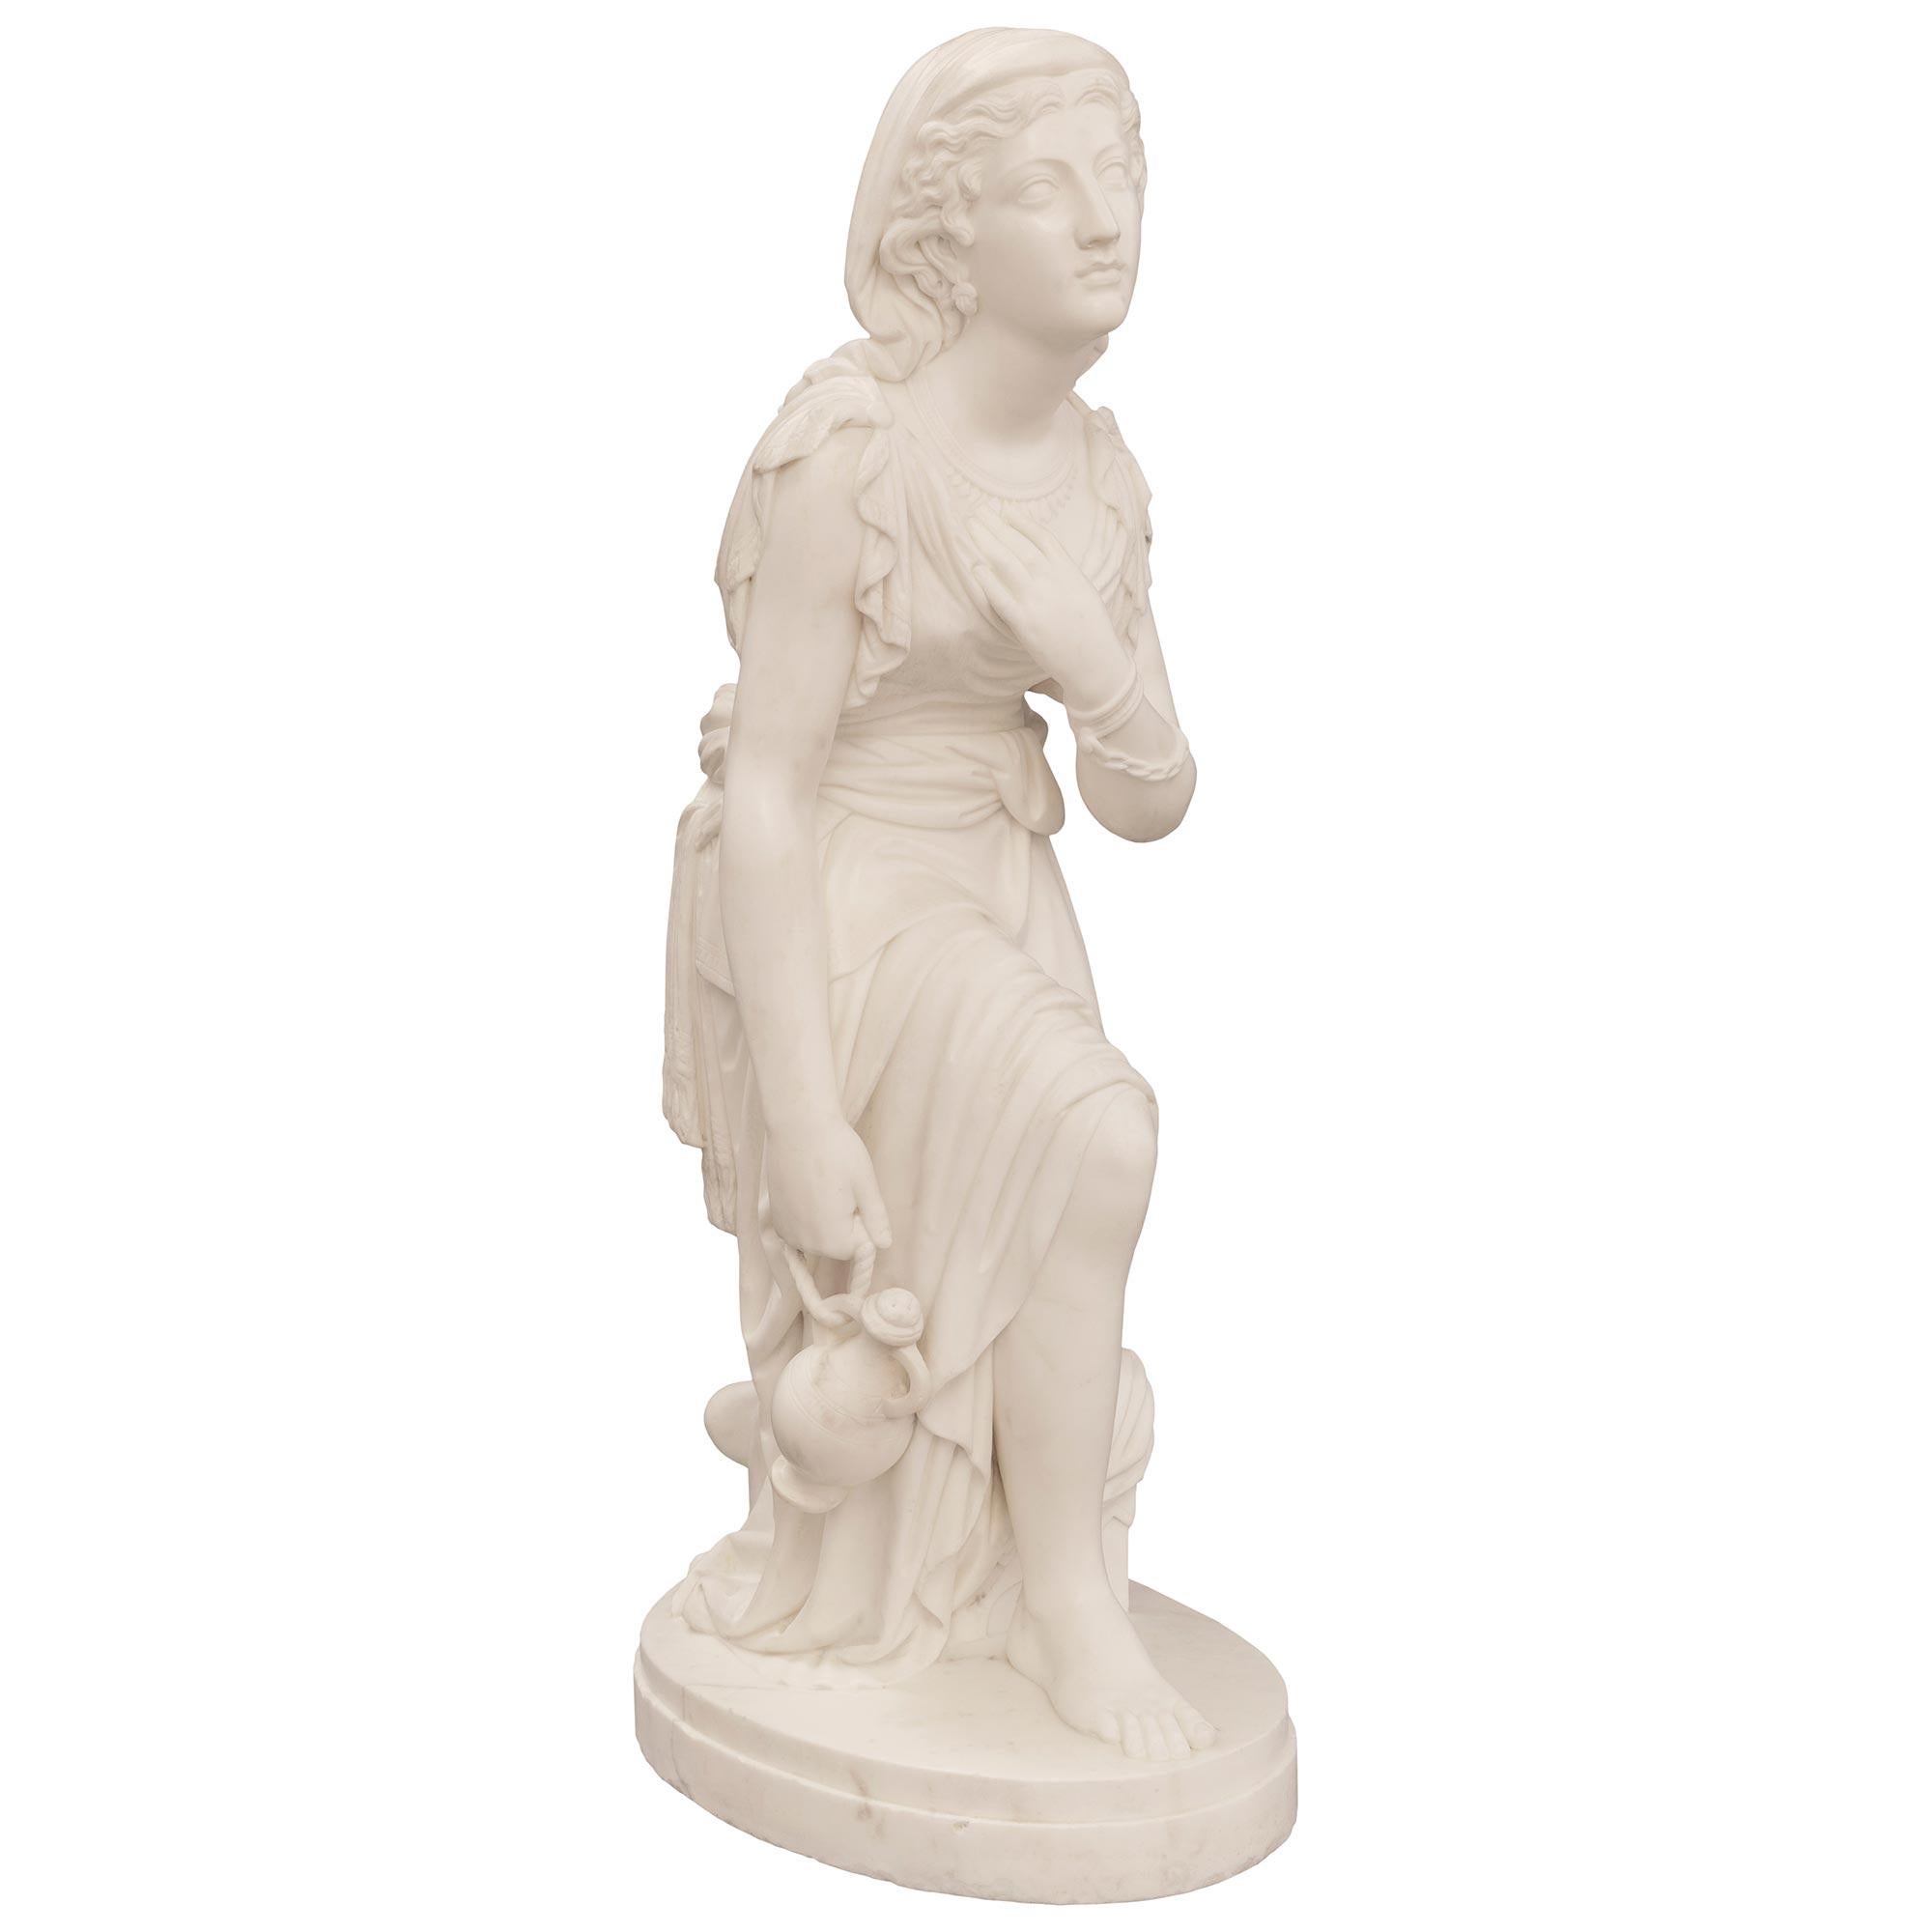 Renaissance Revival A Italian 19th century white Carrara marble statue signed J. Warrington For Sale